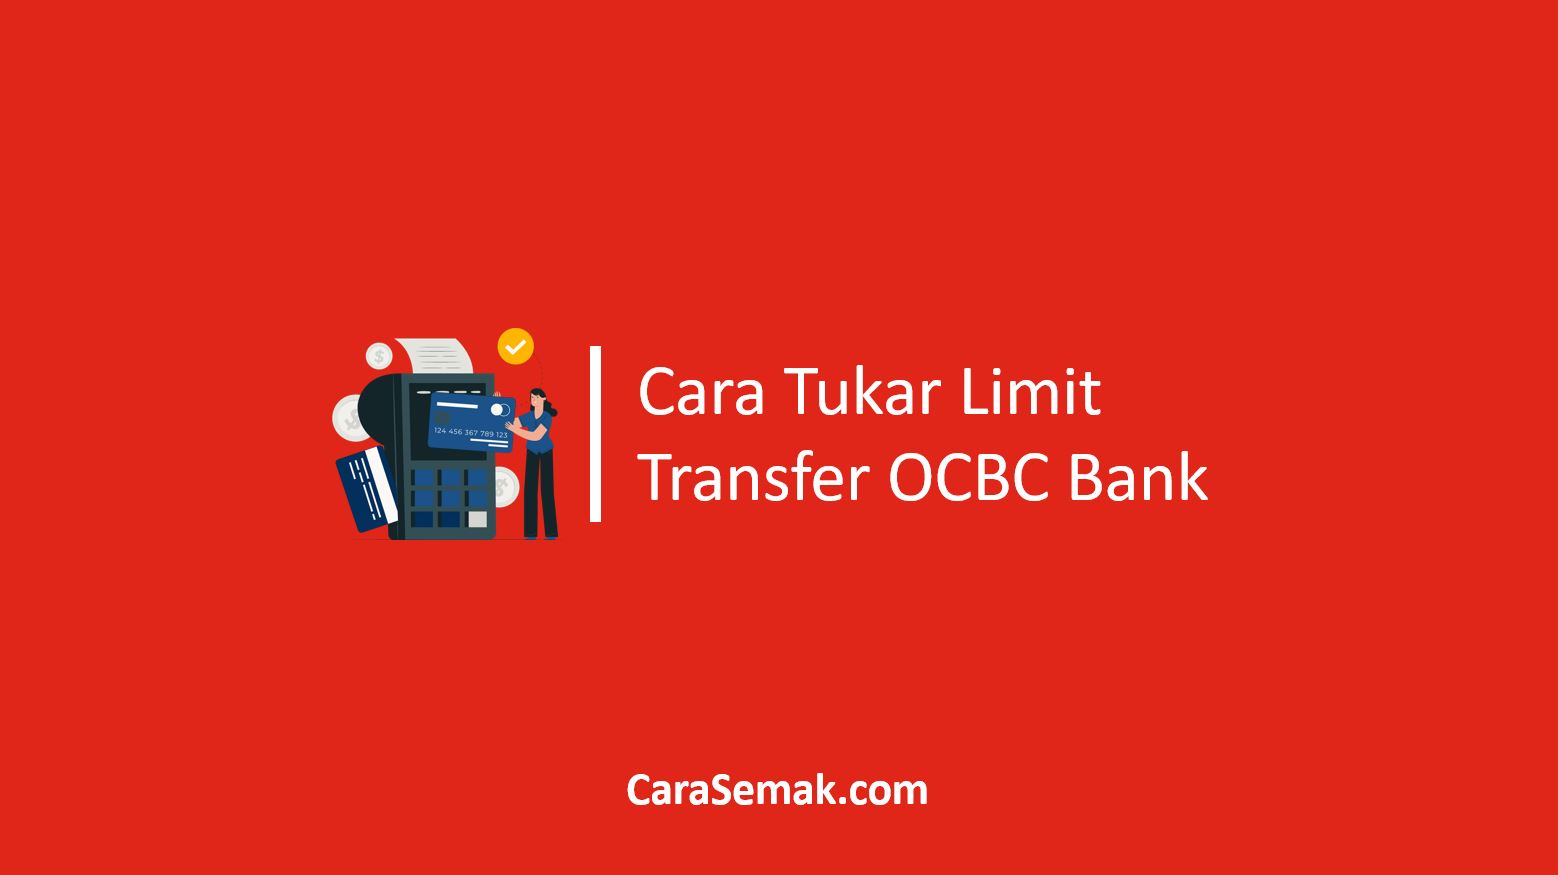 Cara Tukar Limit Transfer OCBC Bank